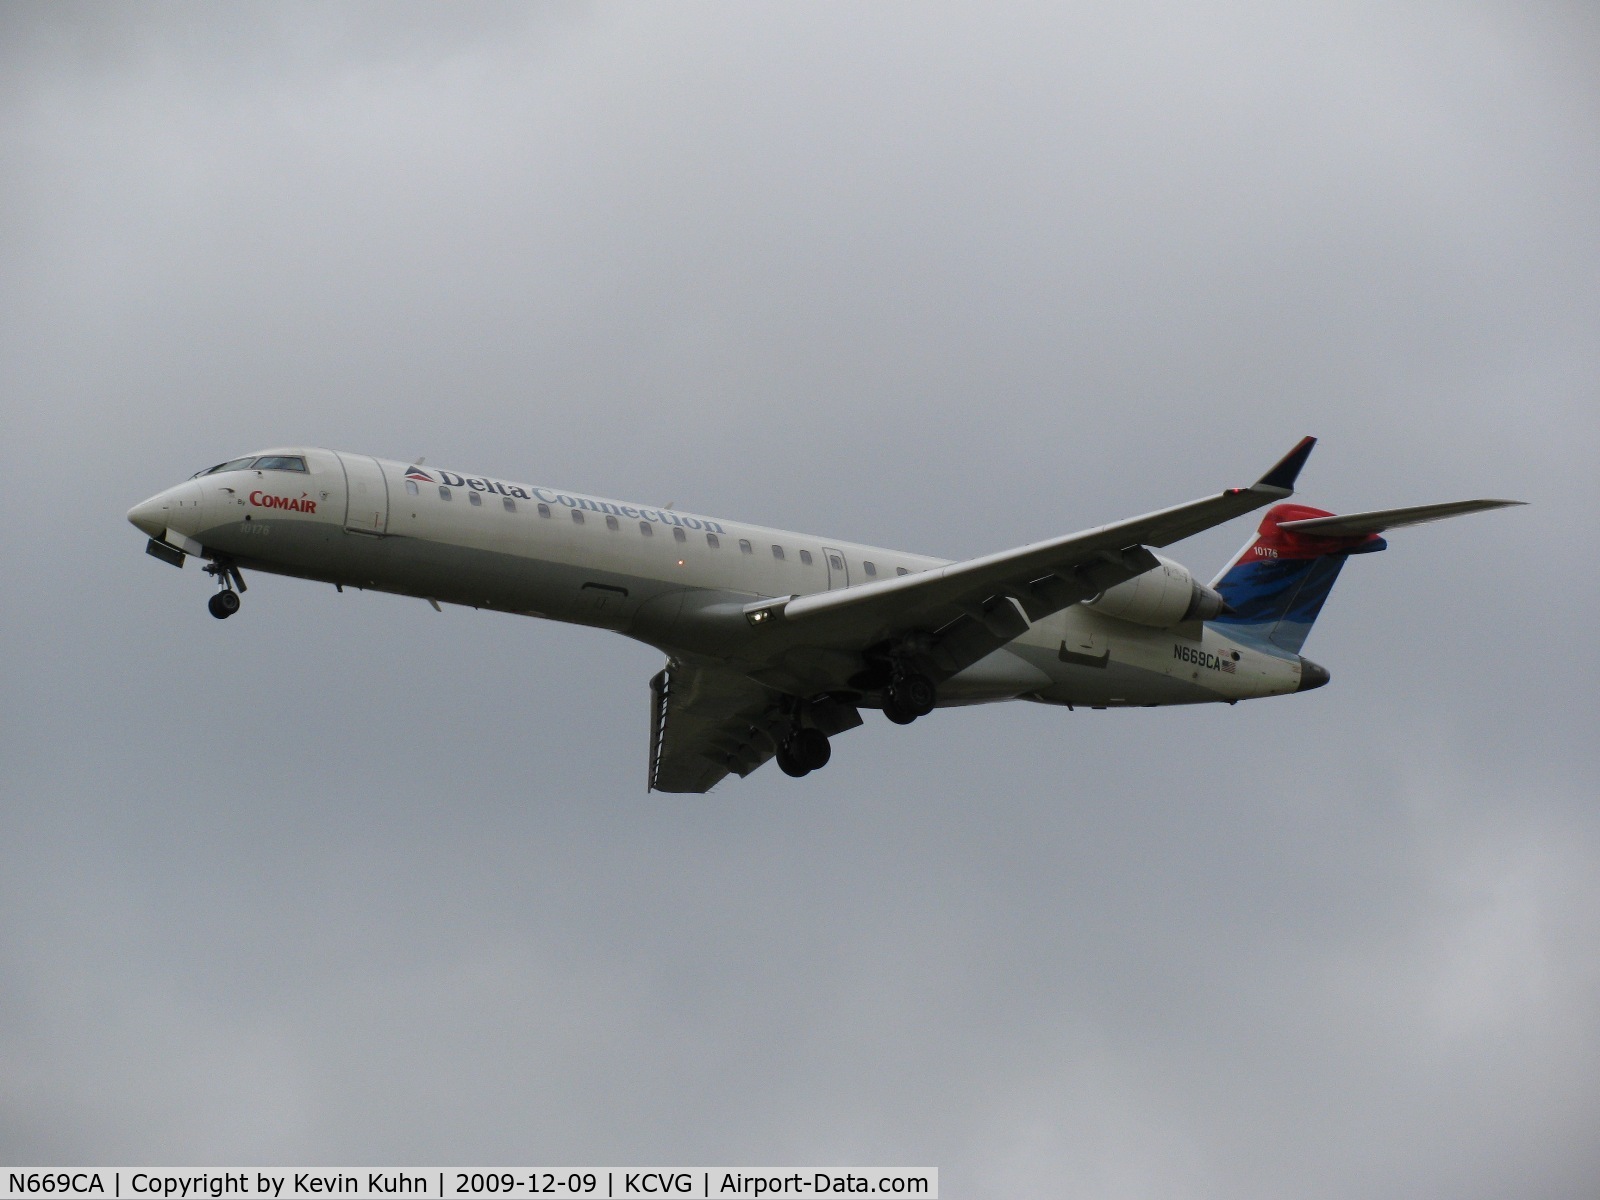 N669CA, 2004 Bombardier CRJ-700 (CL-600-2C10) Regional Jet C/N 10176, Comair CRJ-700 on final approach